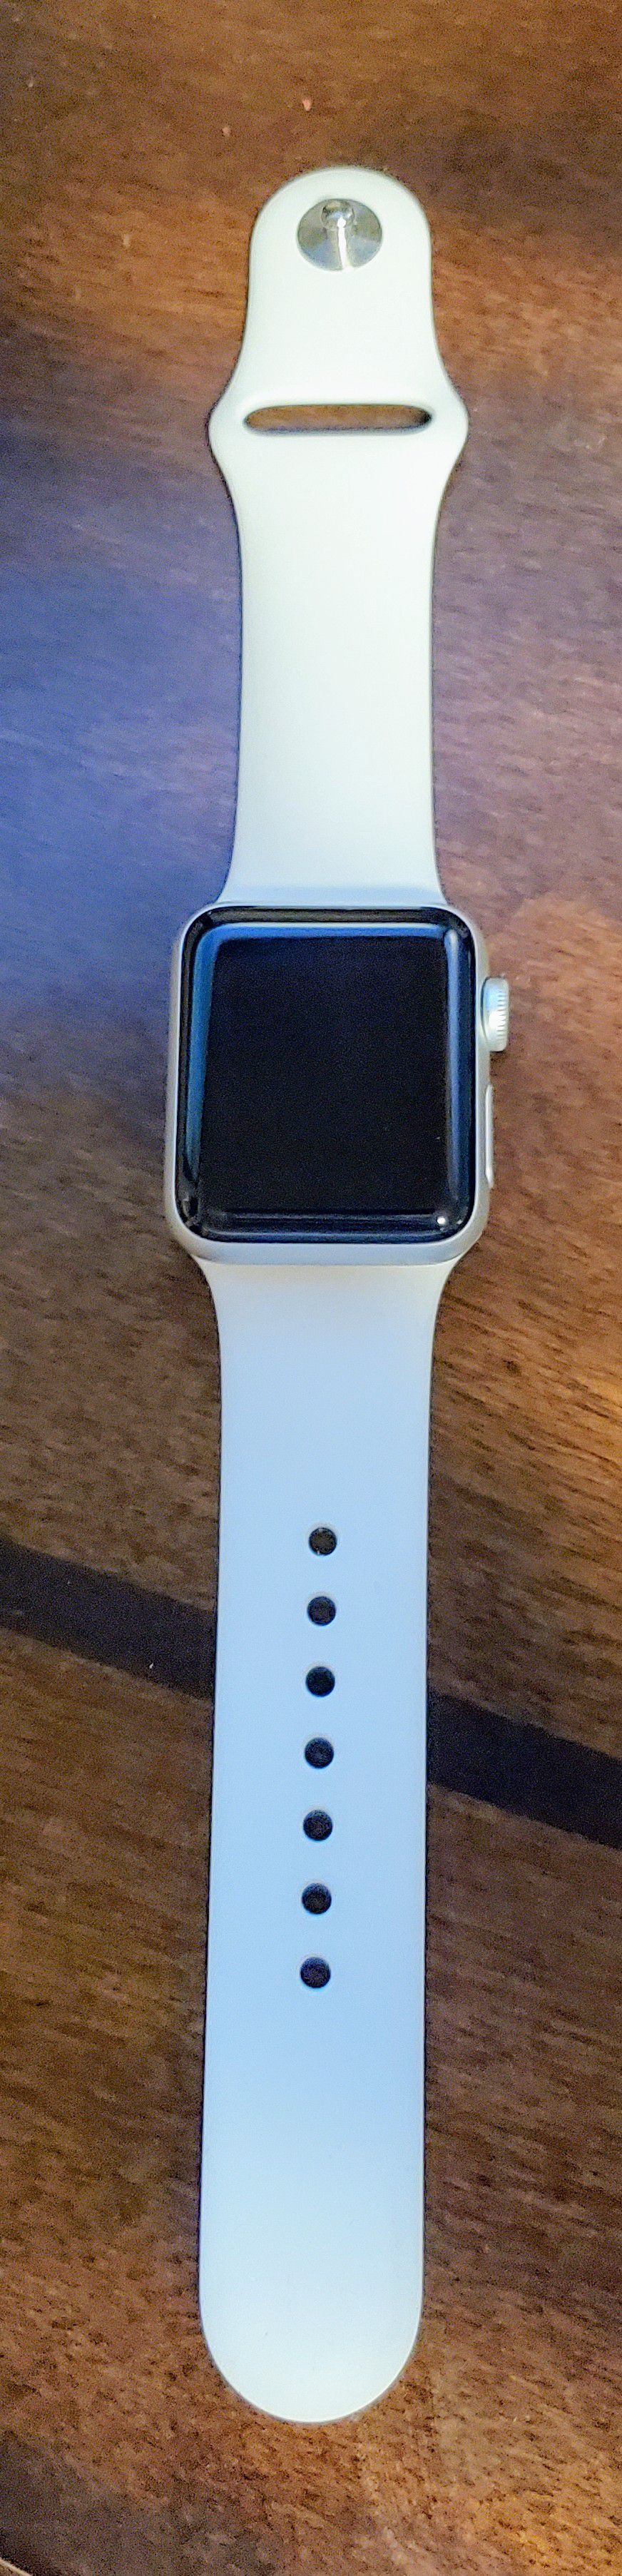 Apple watch series 3 GPS 38mm